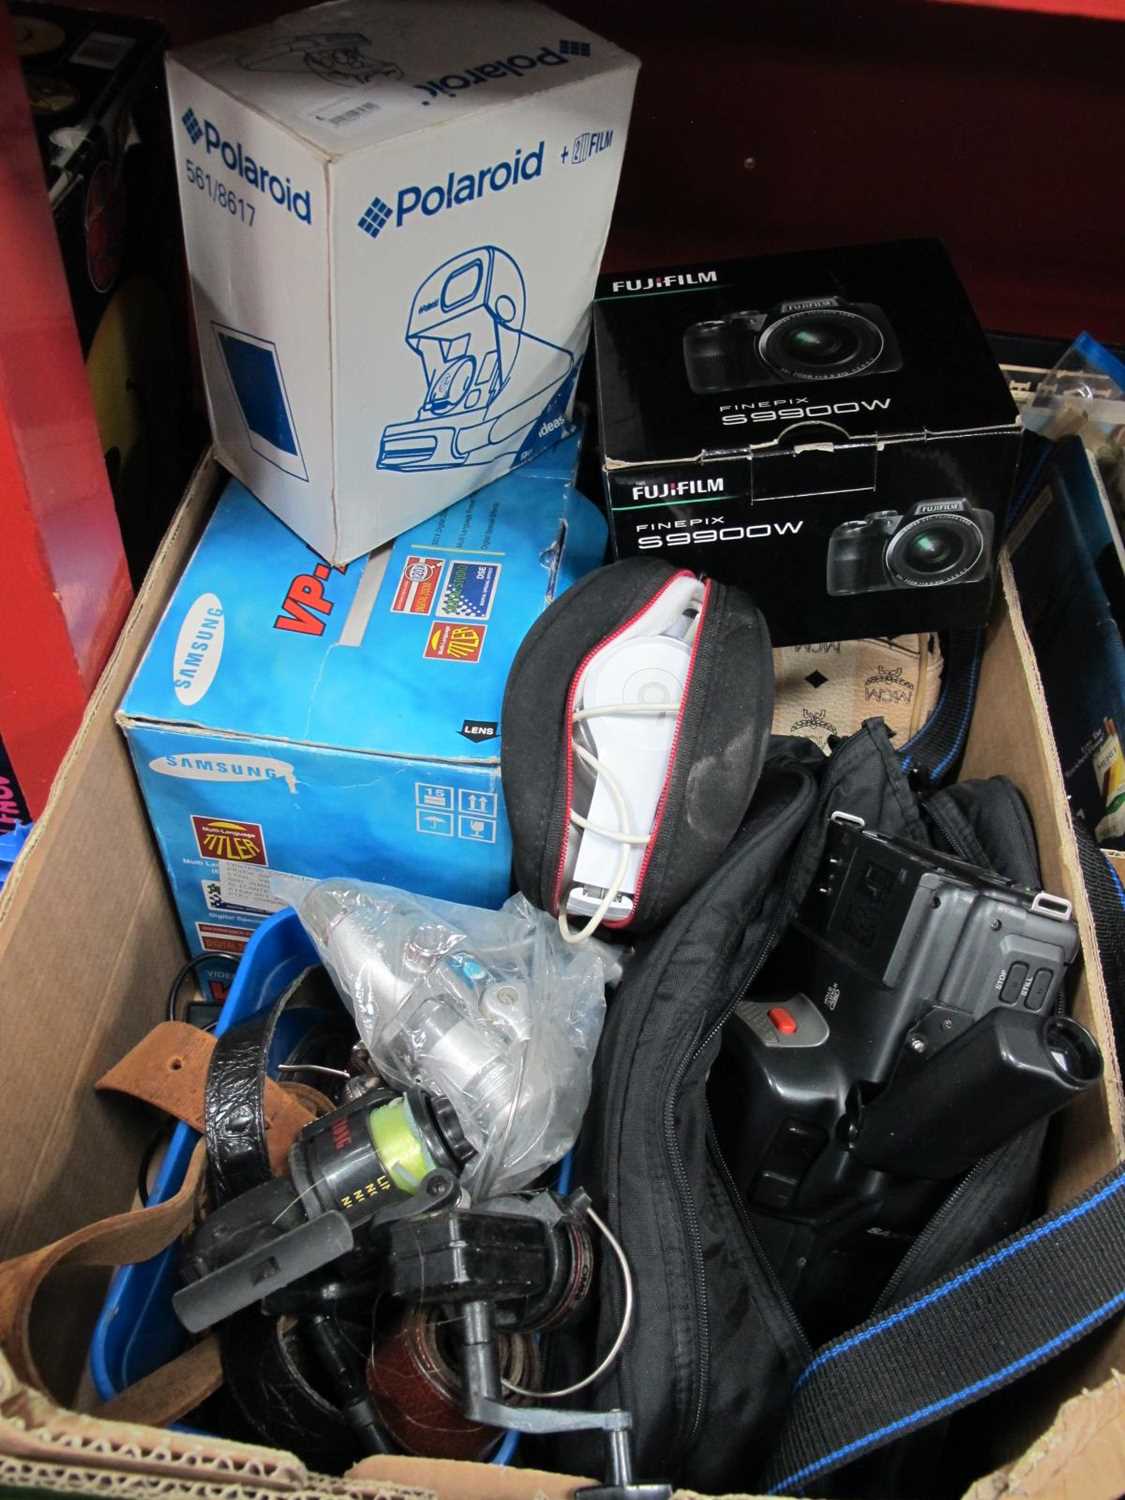 Cameras - Fujifilm, Polaroid, video cams, belts, fishing reels, etc:- One Box.